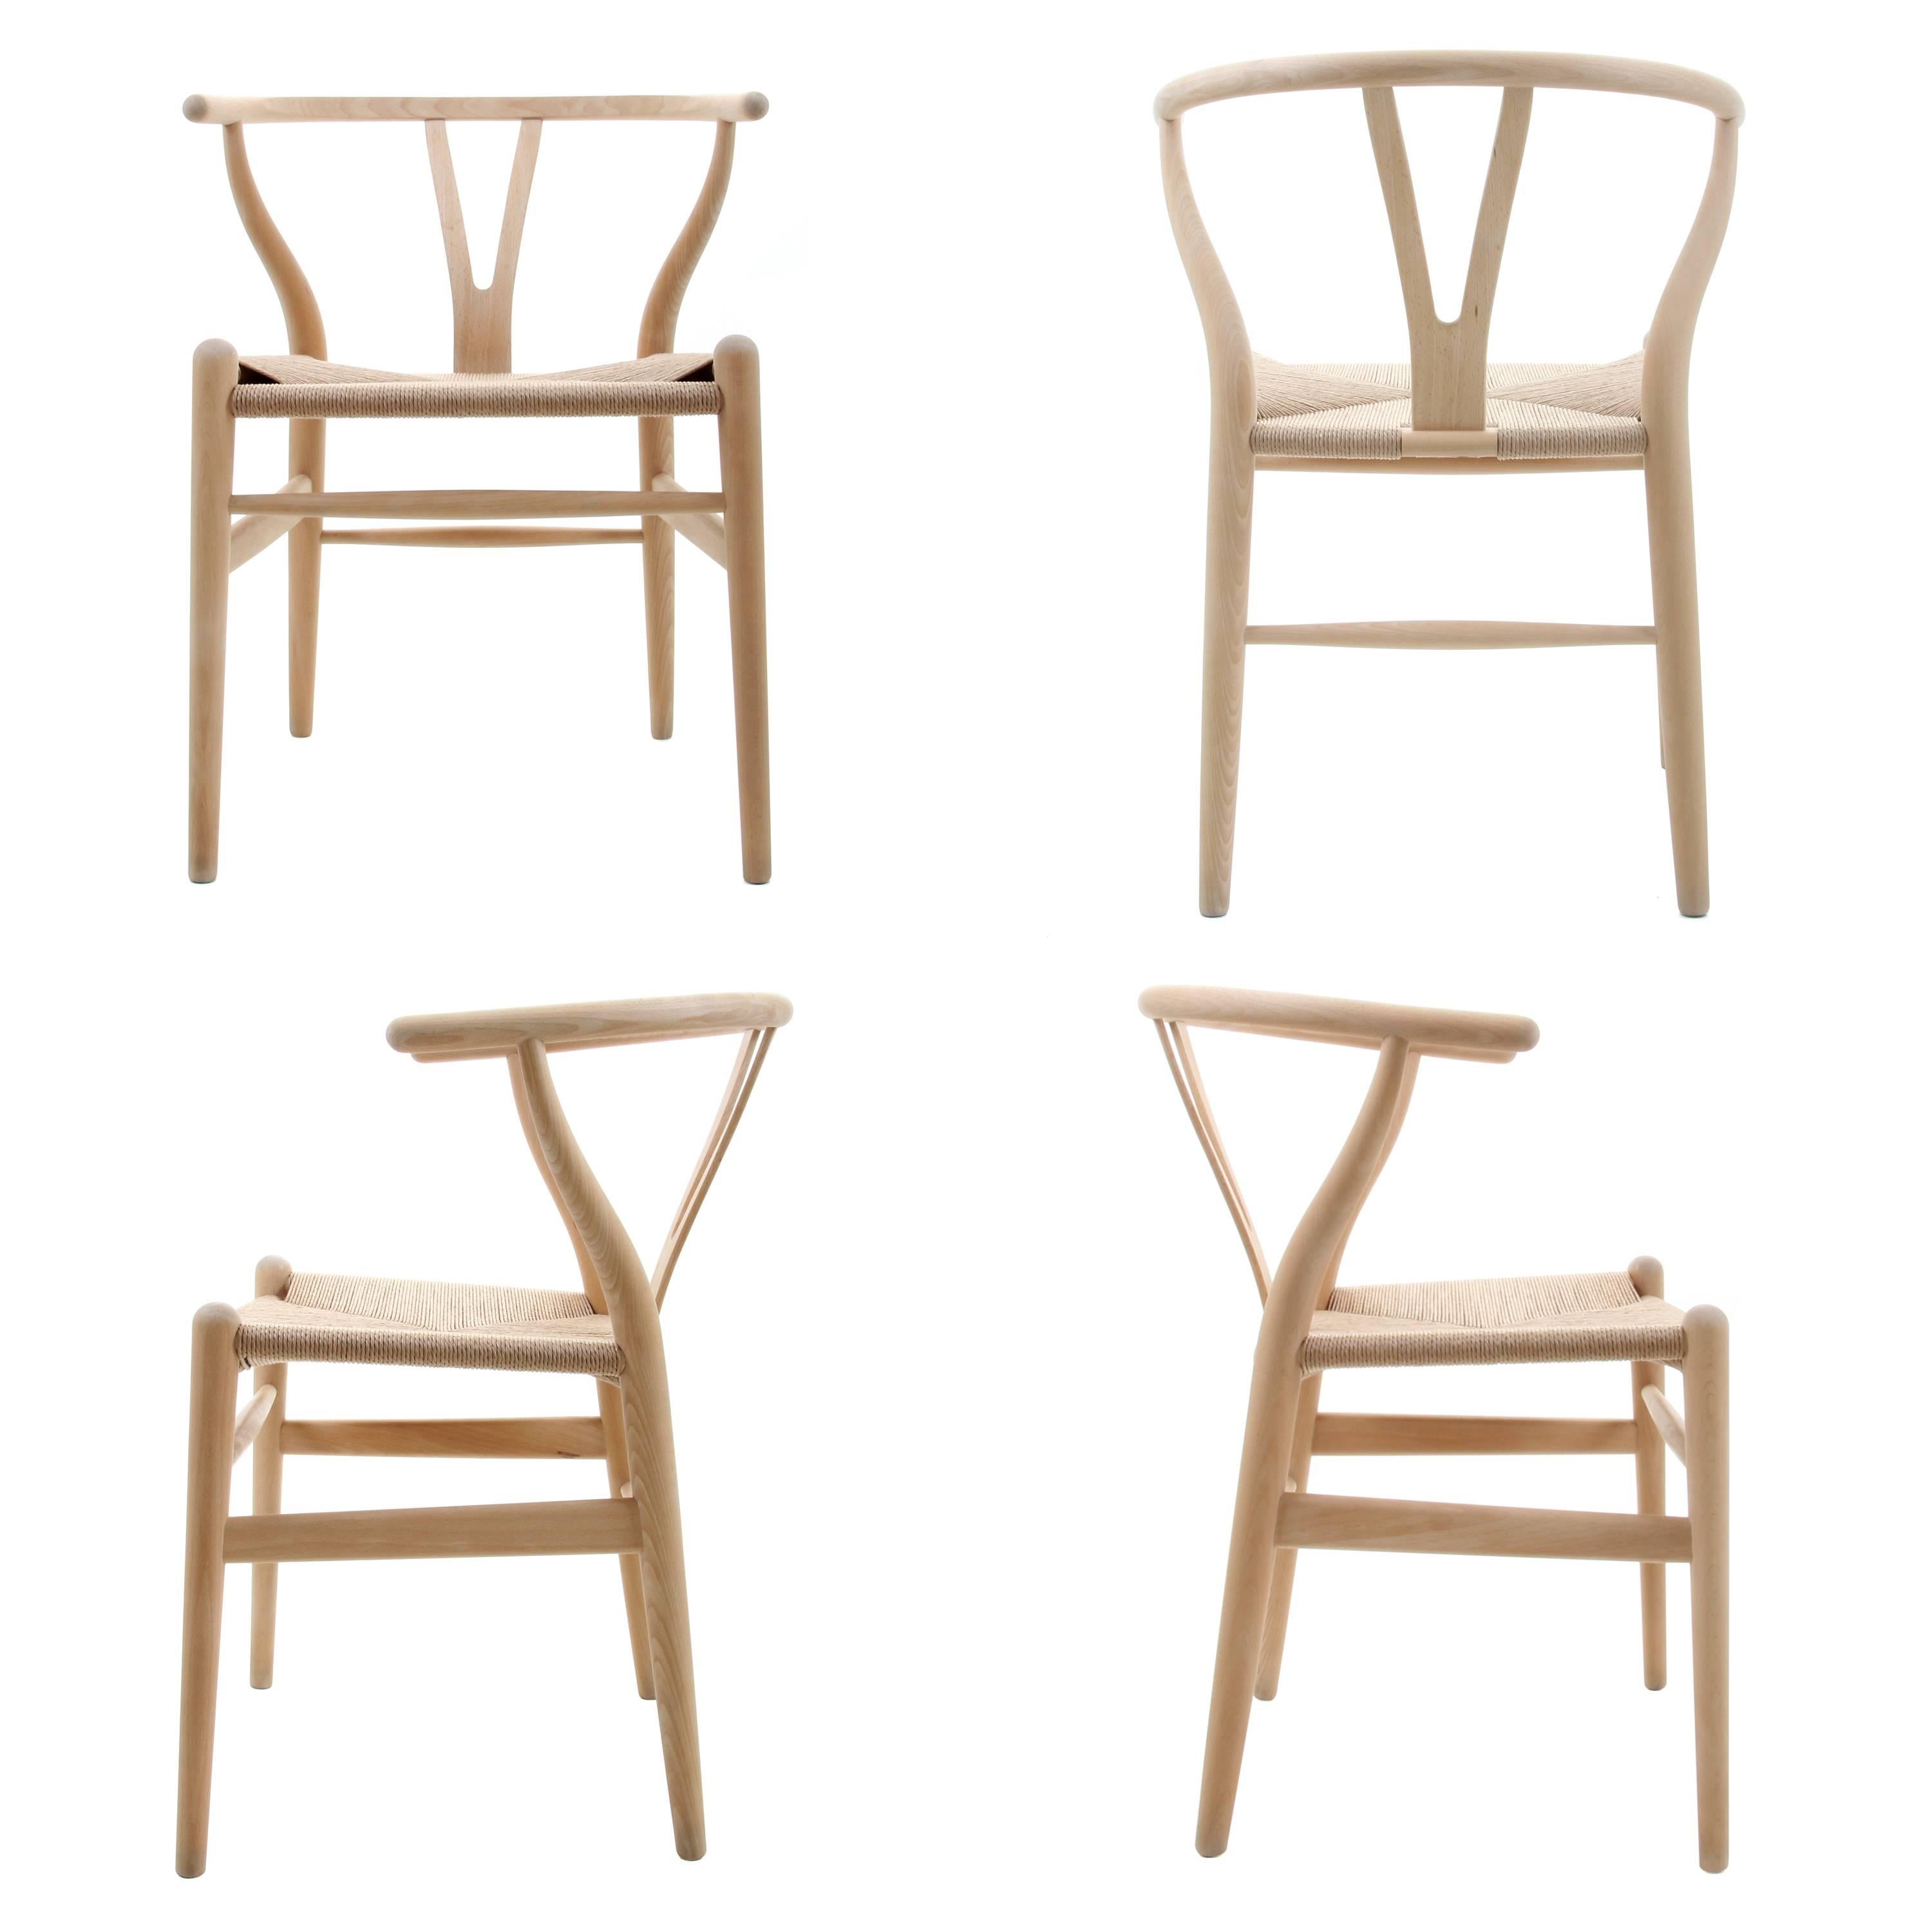 Danish CH24, Wishbone Chairs by Hans J Wegner for Carl Hansen & Son in 1949, Pair For Sale